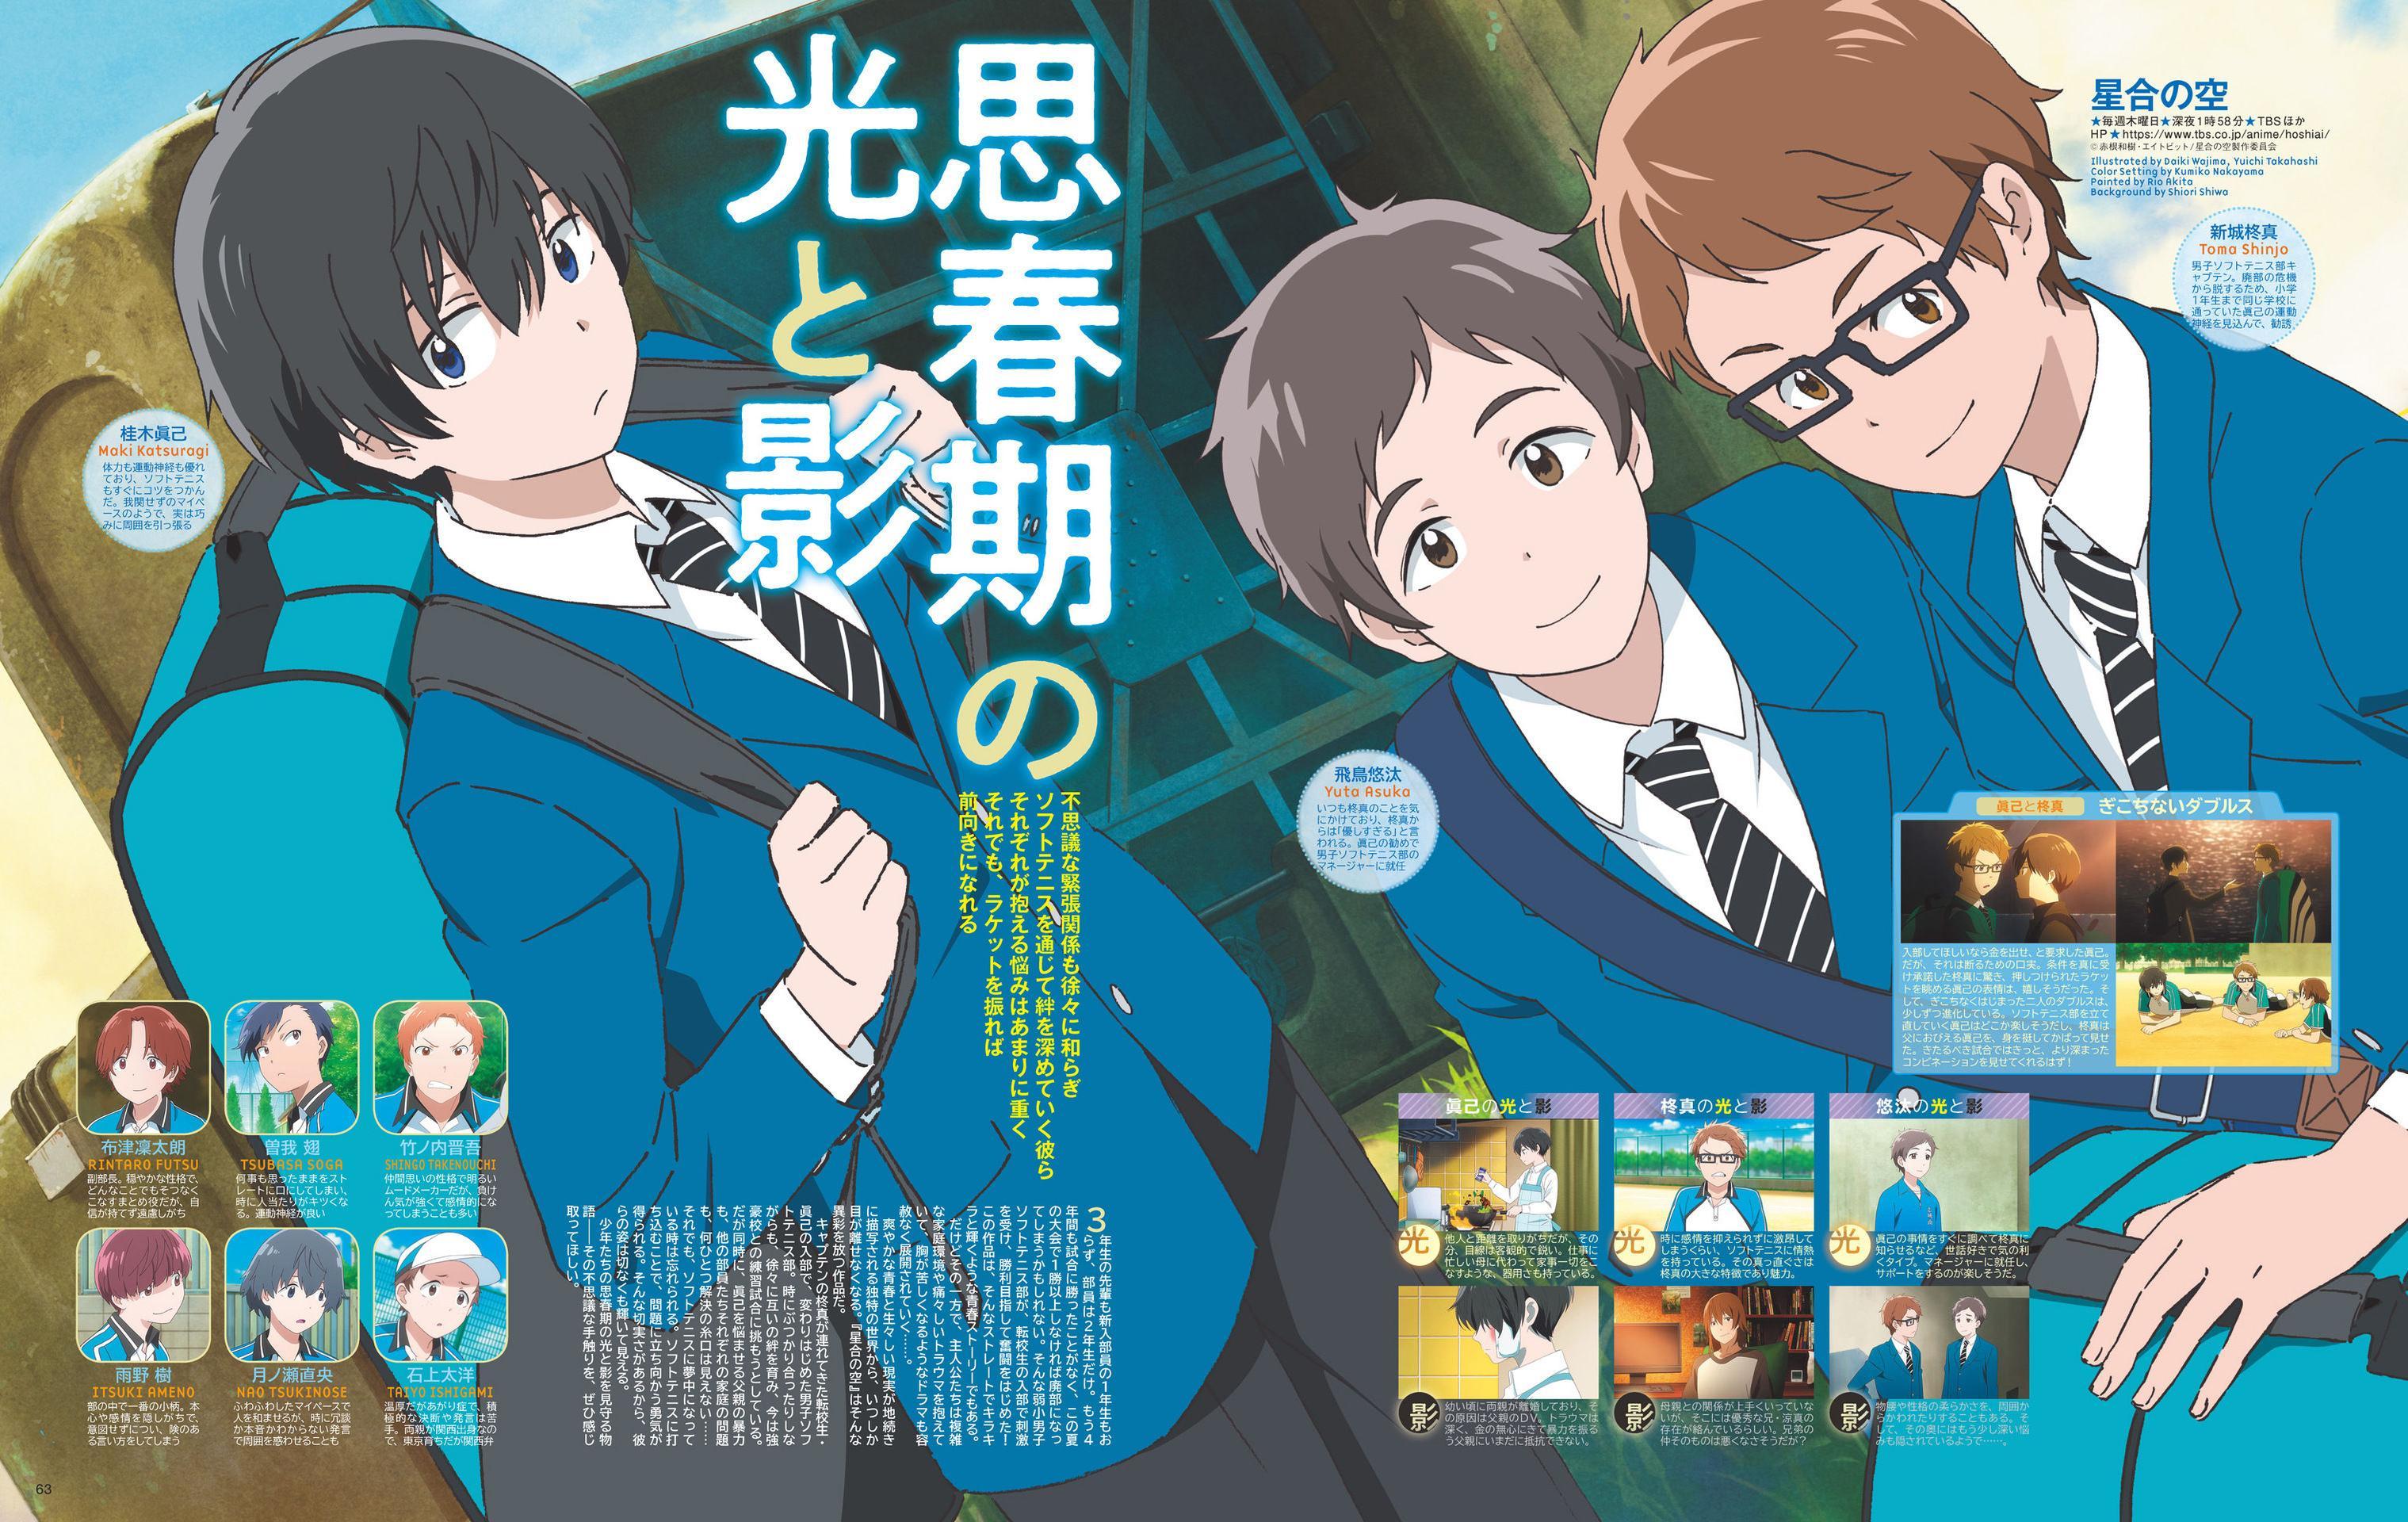 Hoshiai no Sora (Stars Align) Anime Image Board